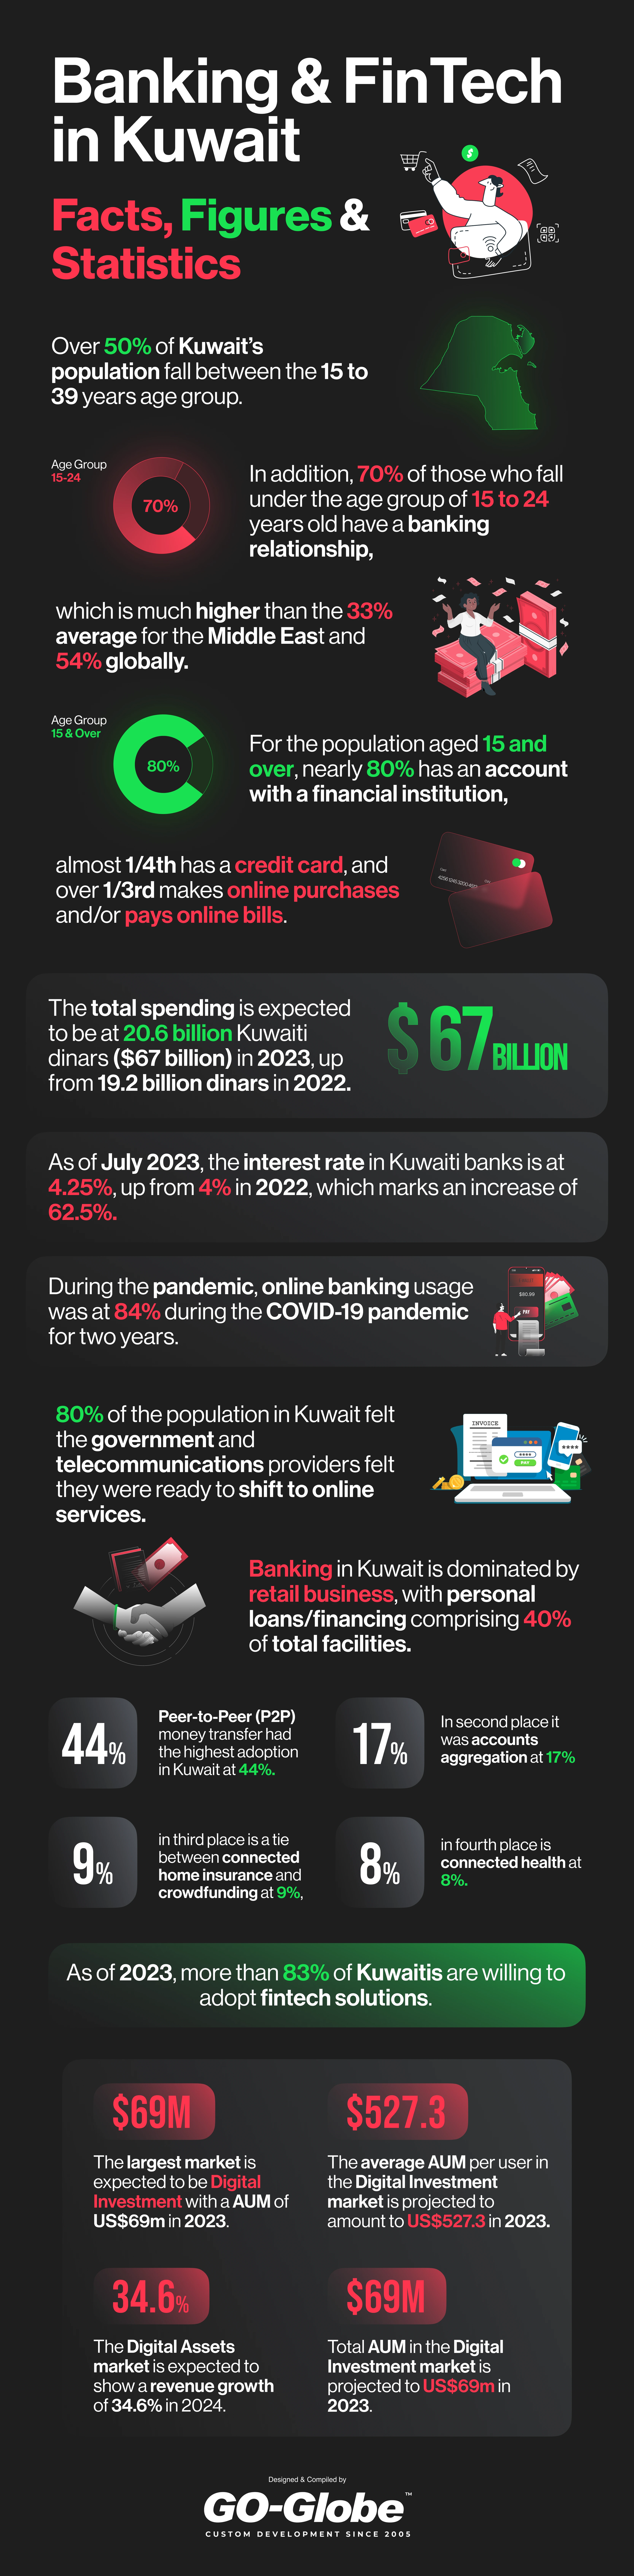 banking_fintech_kuwait